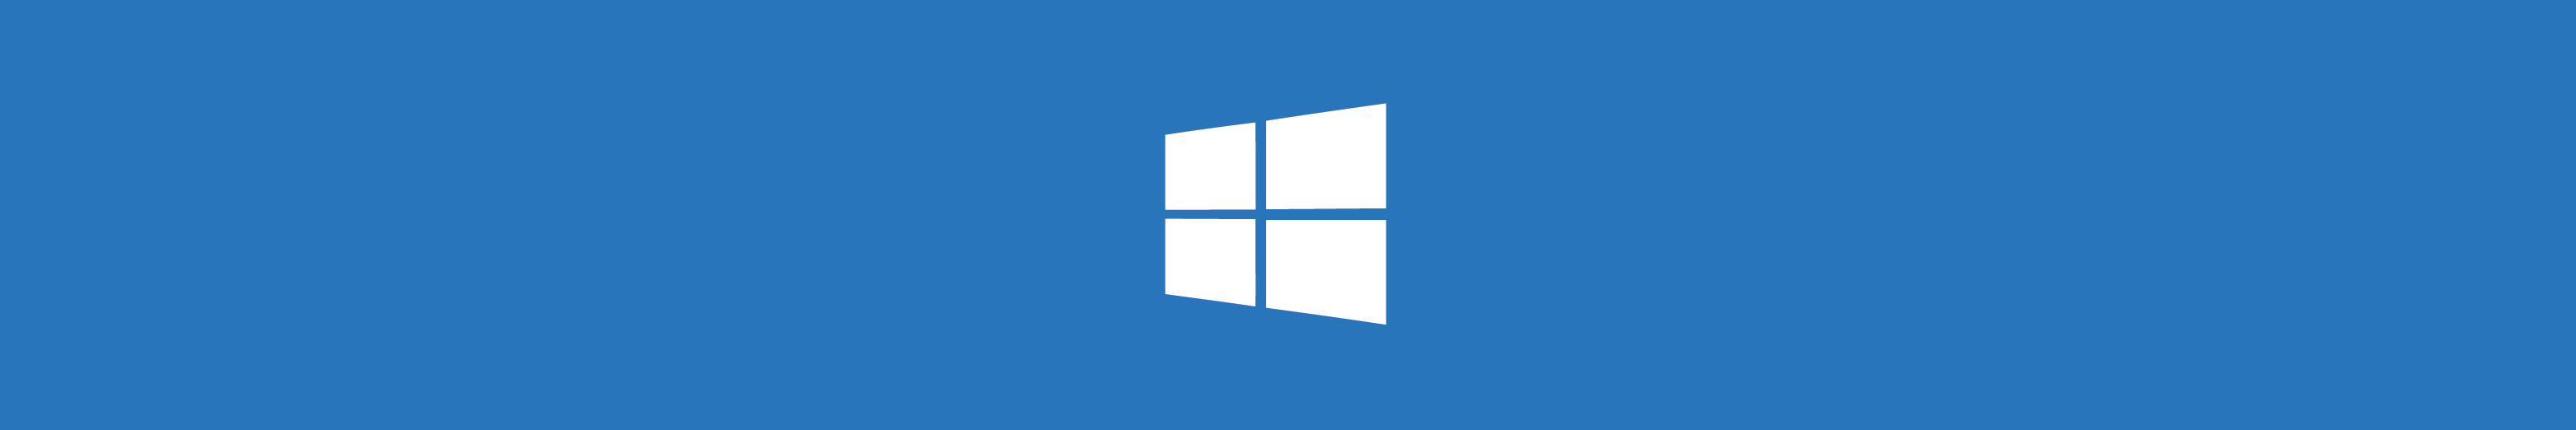 Load 8 1. Загрузка виндовс. Загрузка Windows 10. Анимация загрузки Windows. Windows 8 логотип.